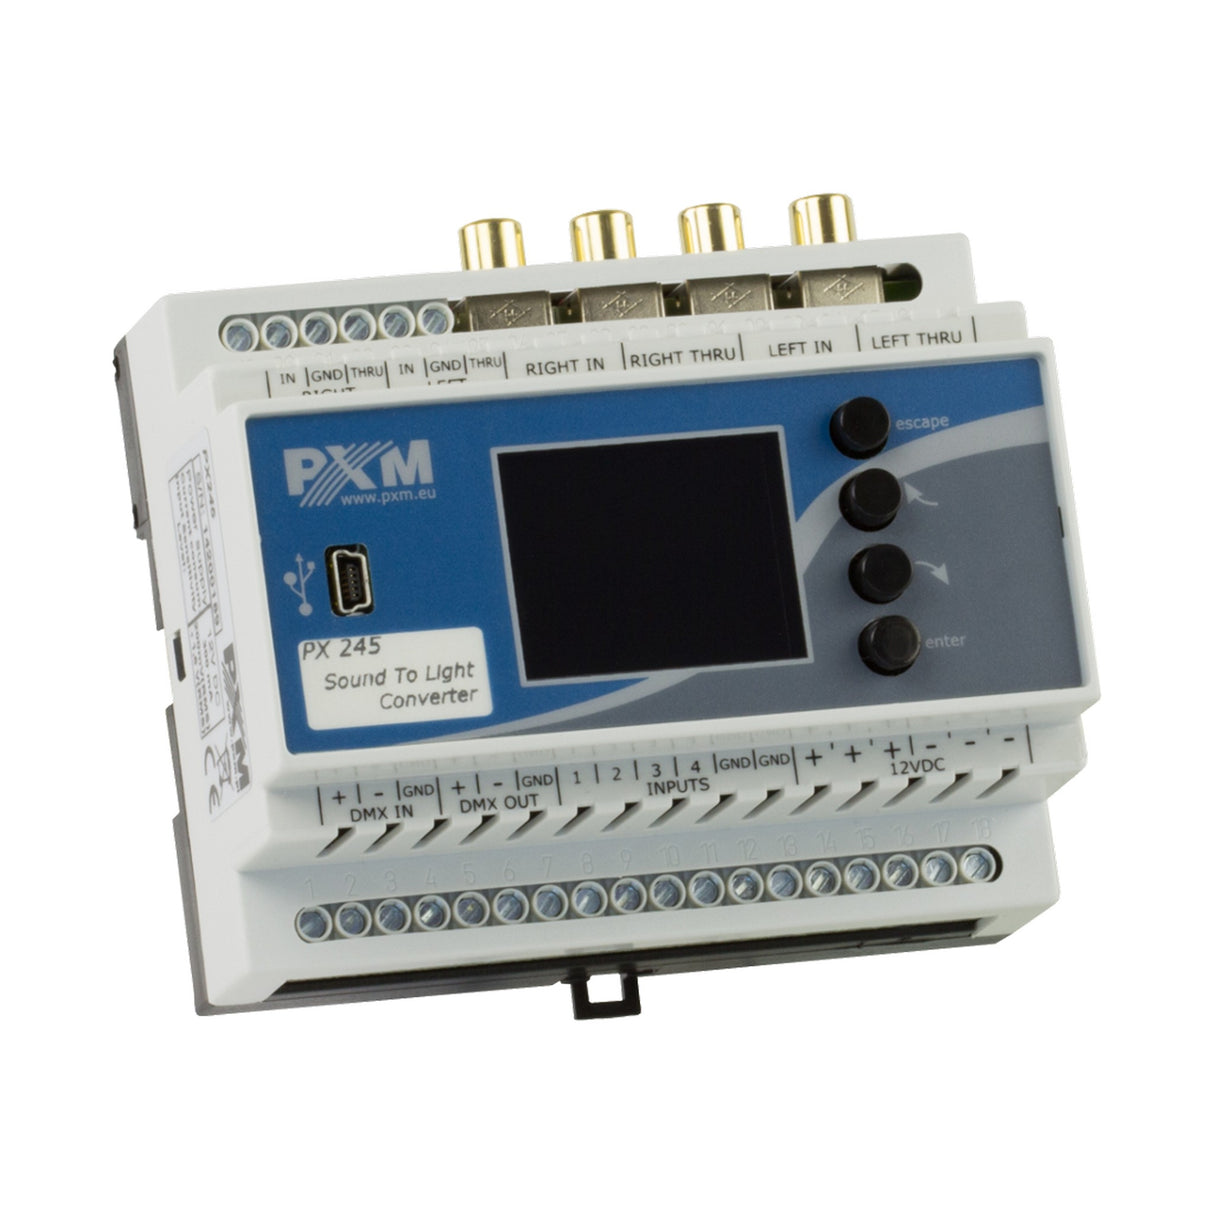 PXM PX245 DMX-512 Sound to Light Converter